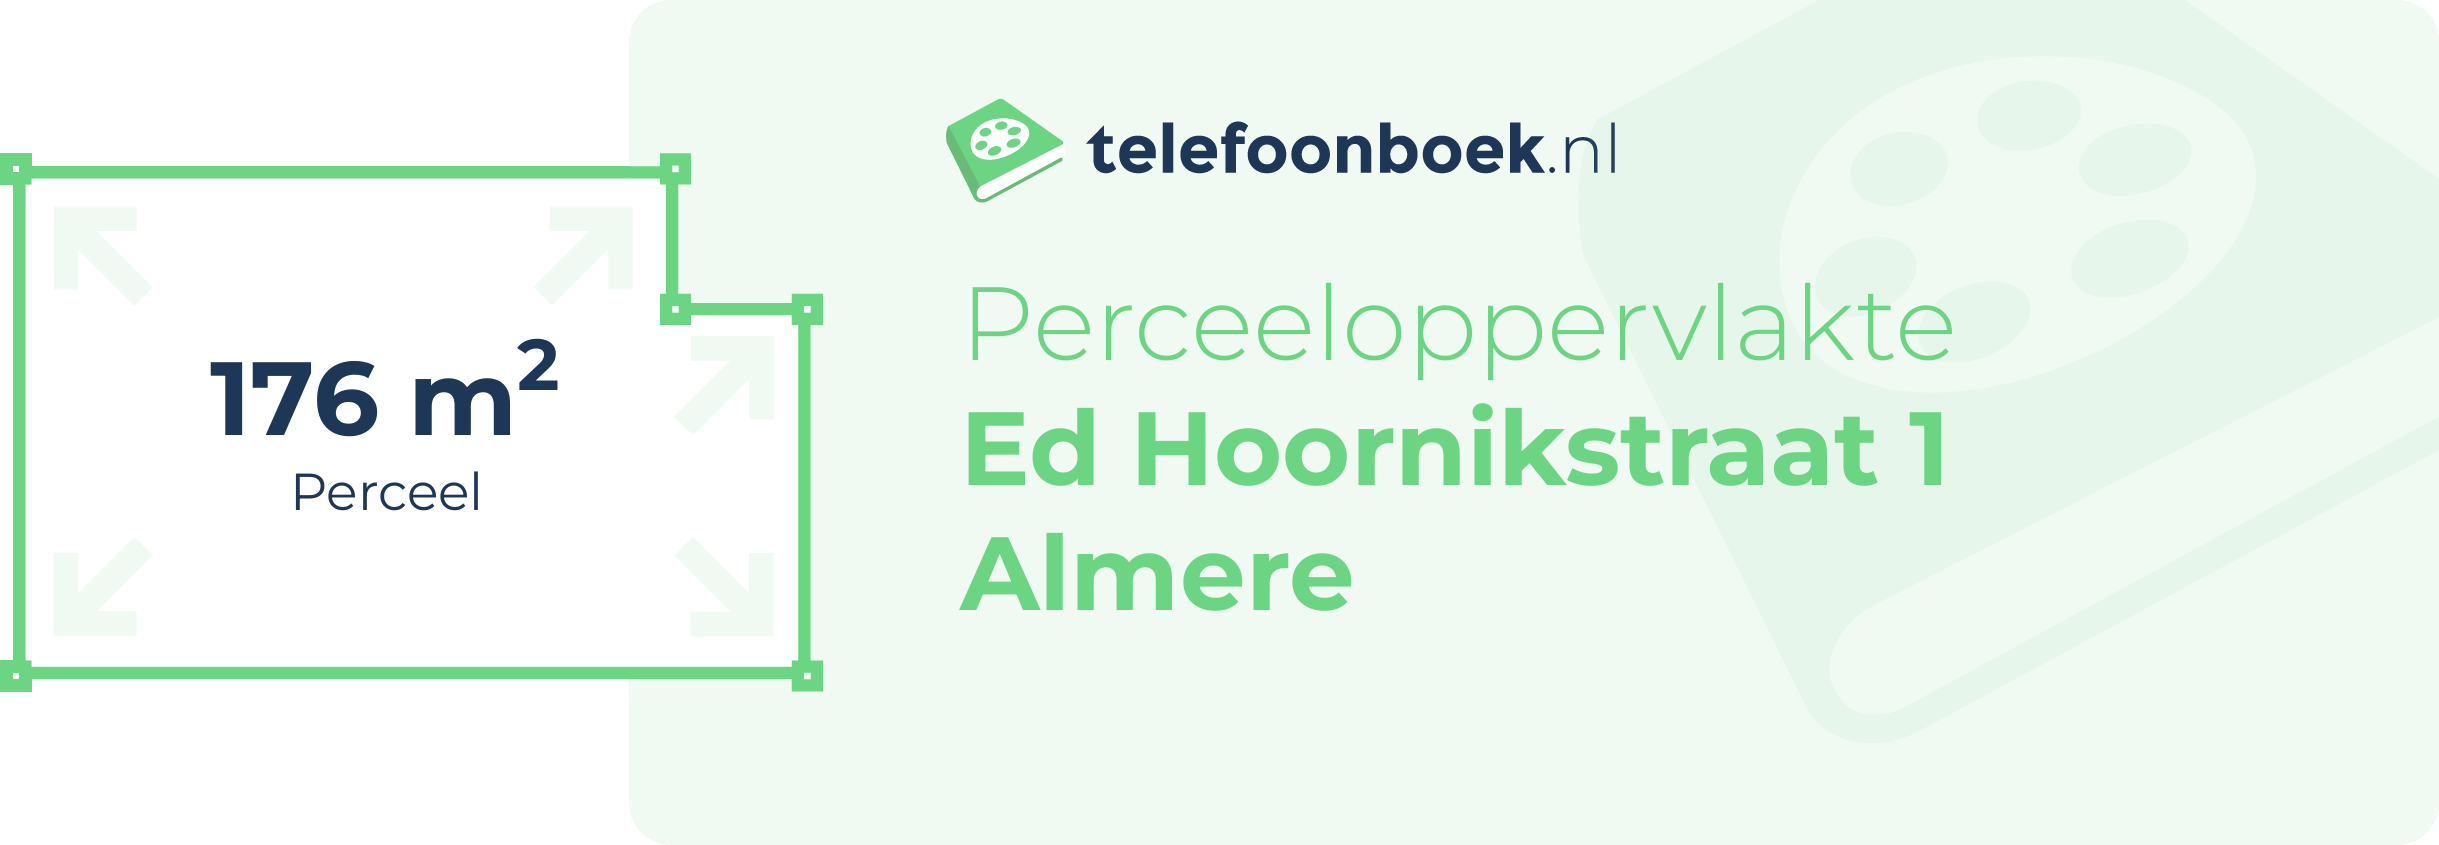 Perceeloppervlakte Ed Hoornikstraat 1 Almere